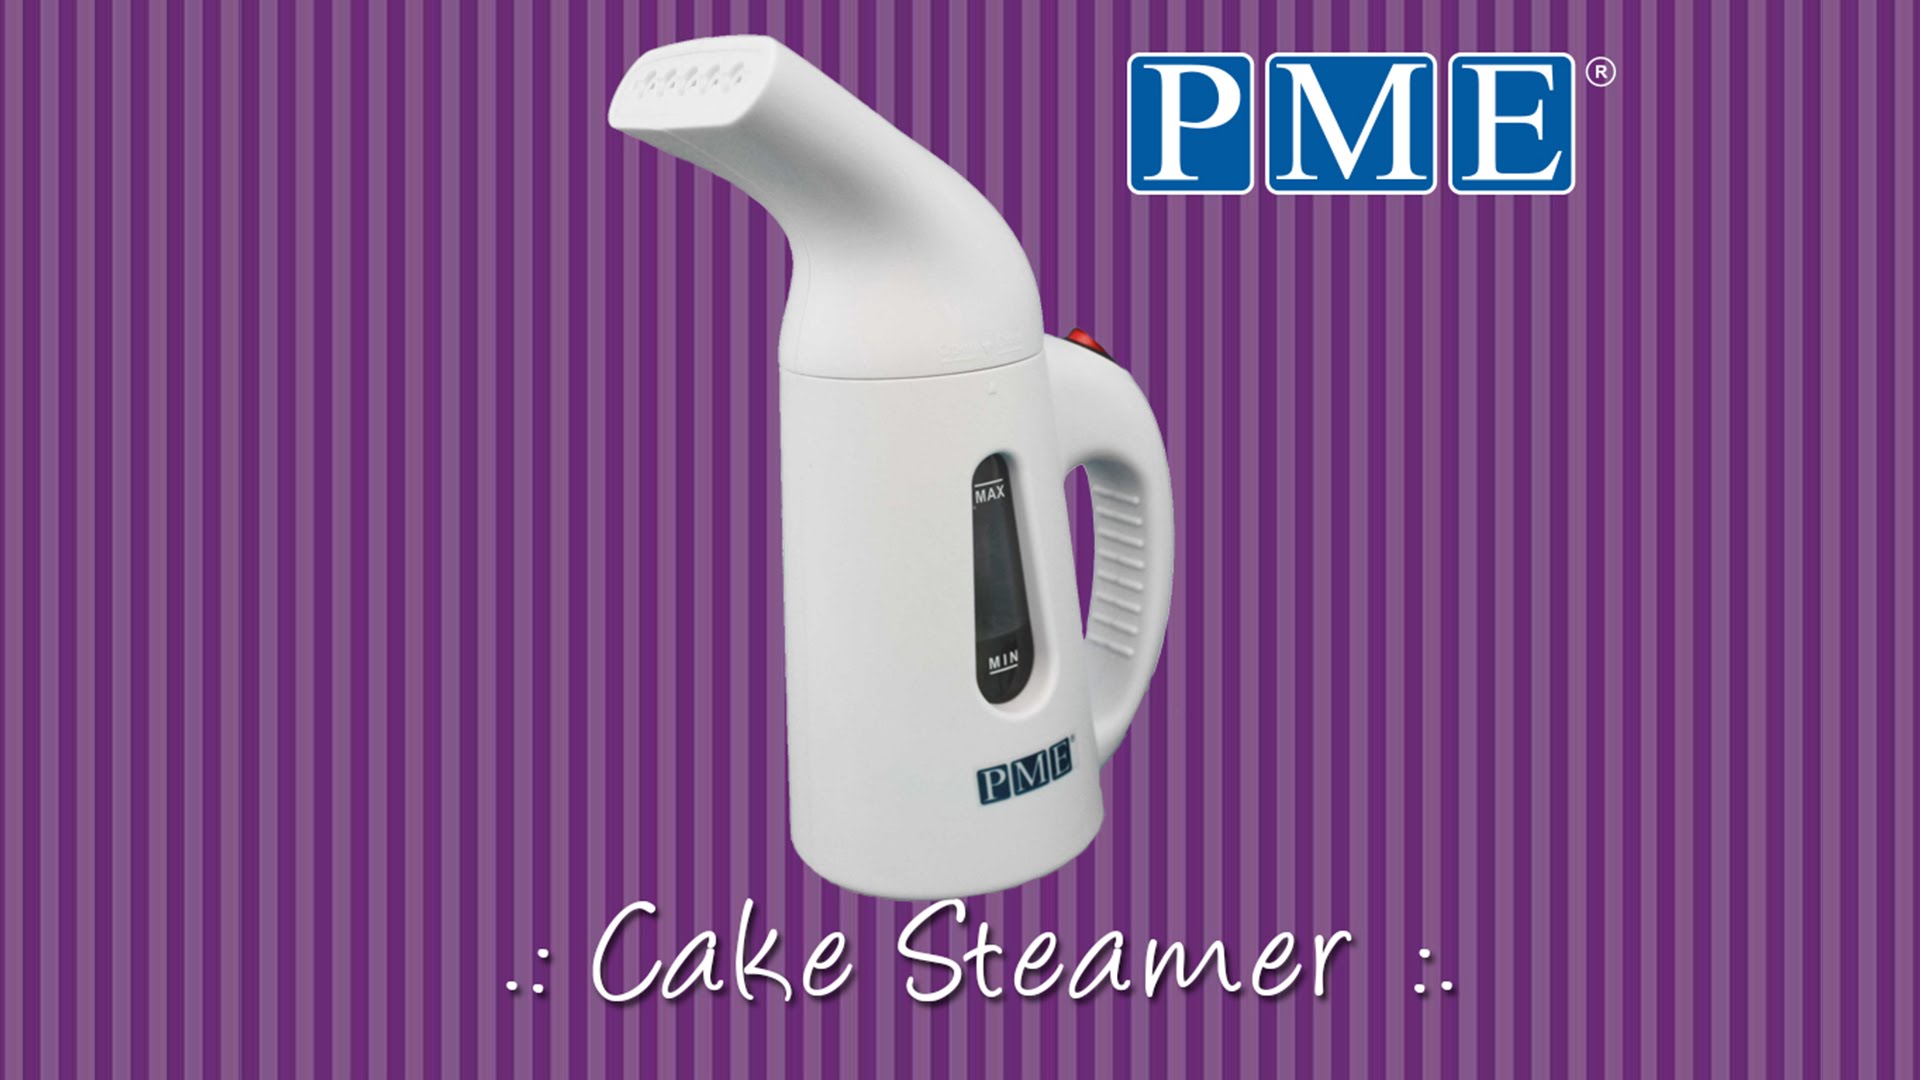  Foto: Pme - Cake Steamer